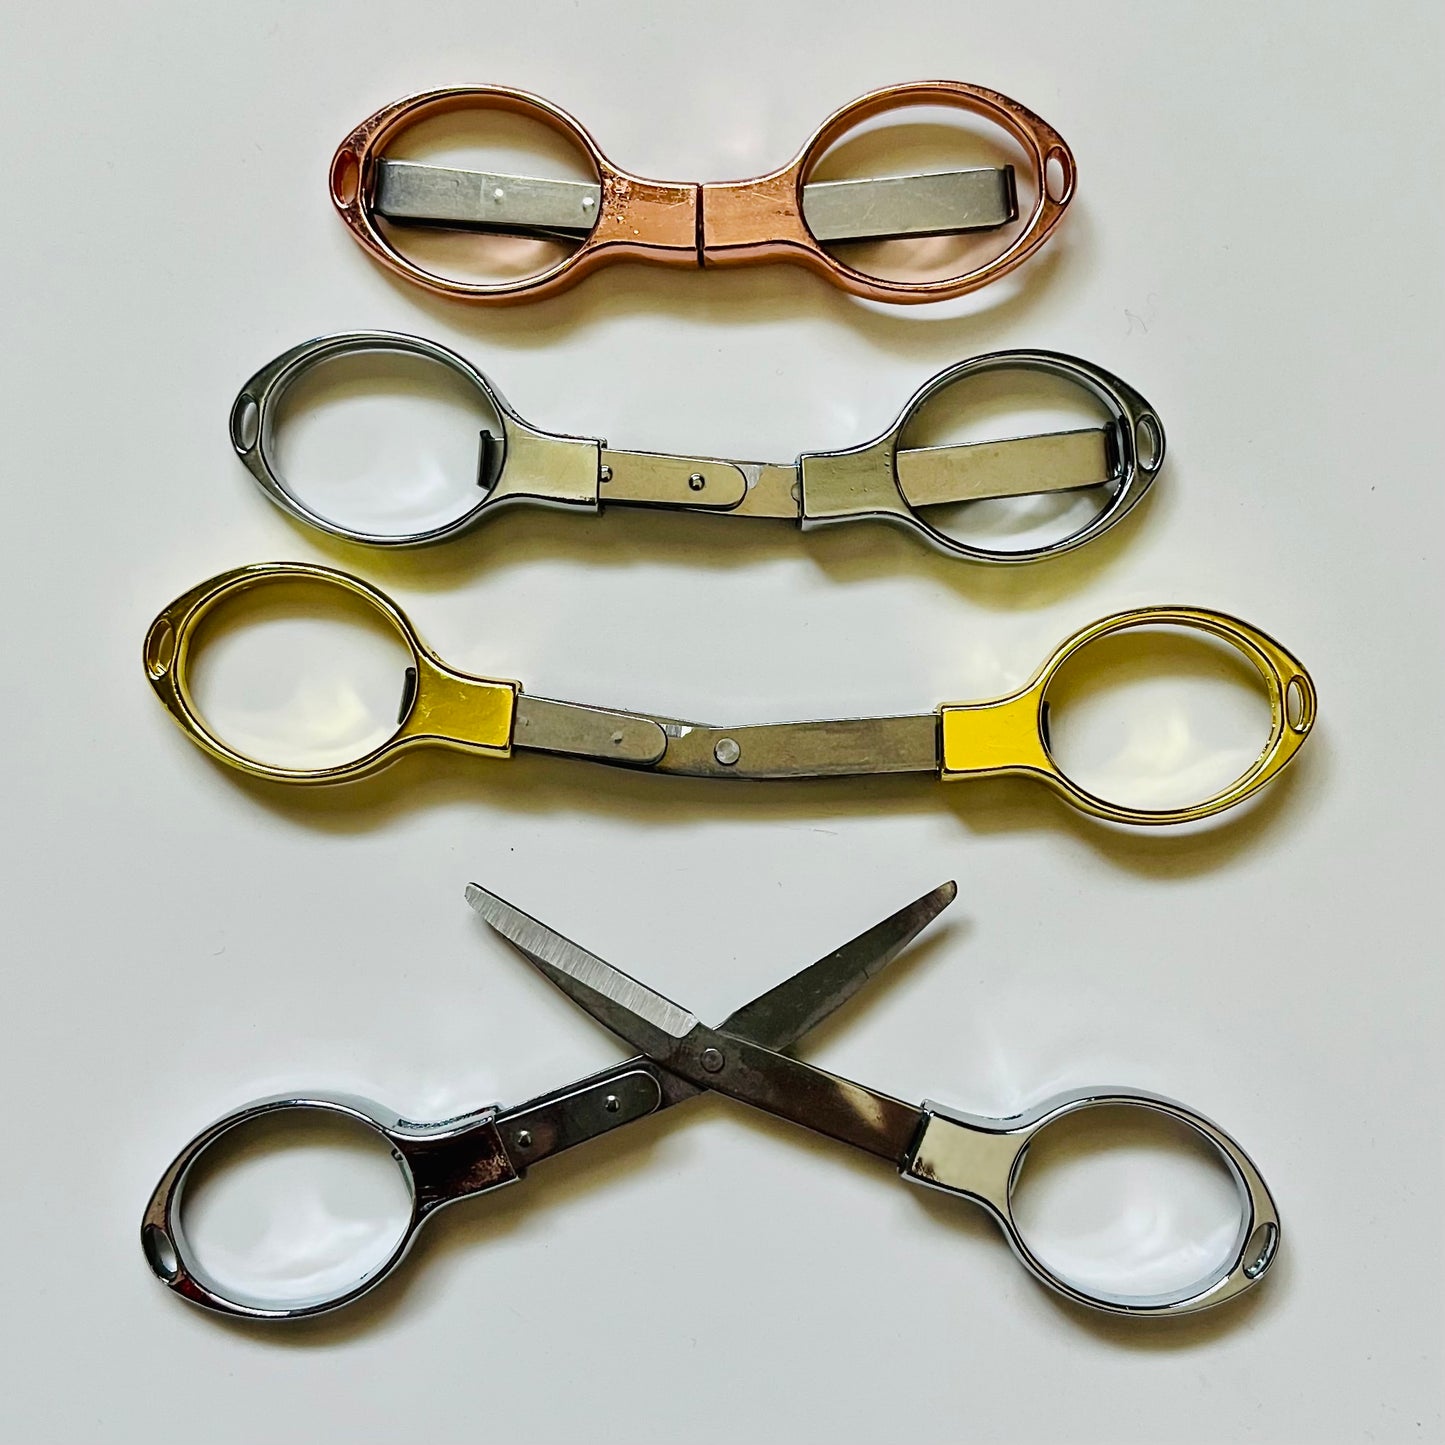 Foldable Scissors, Knit Picks #80626